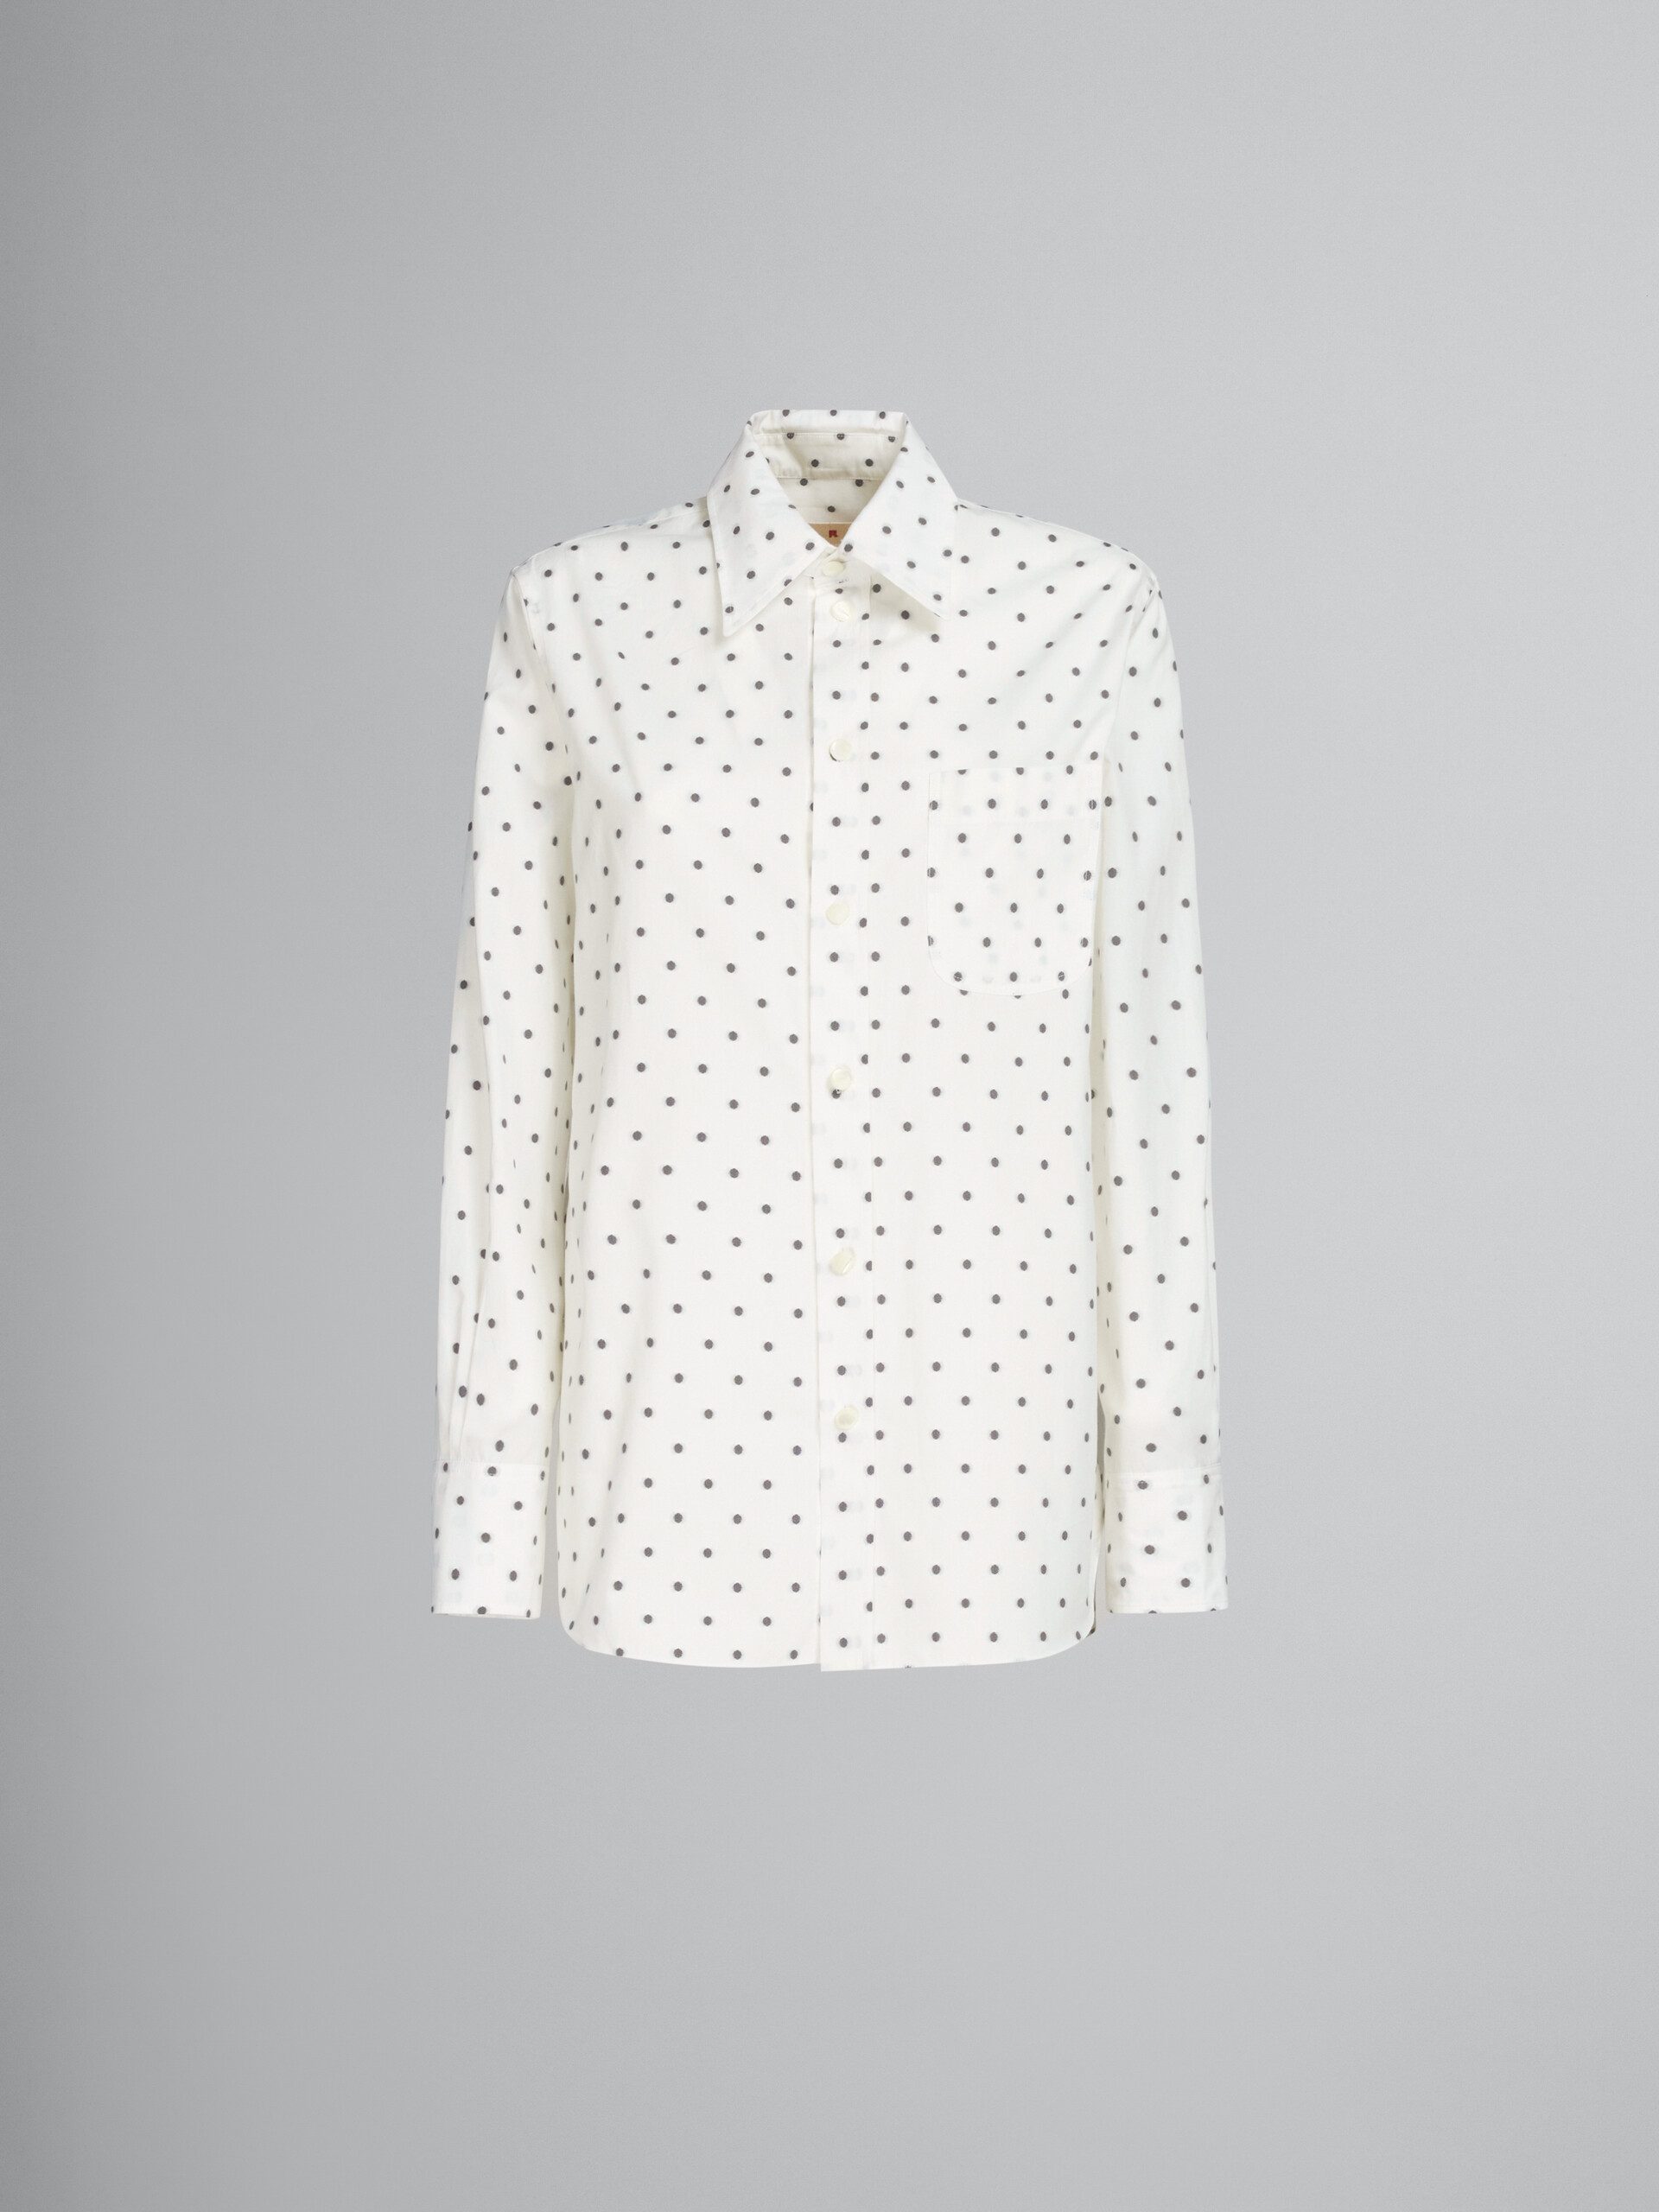 White poplin shirt with polka dots - Shirts - Image 1